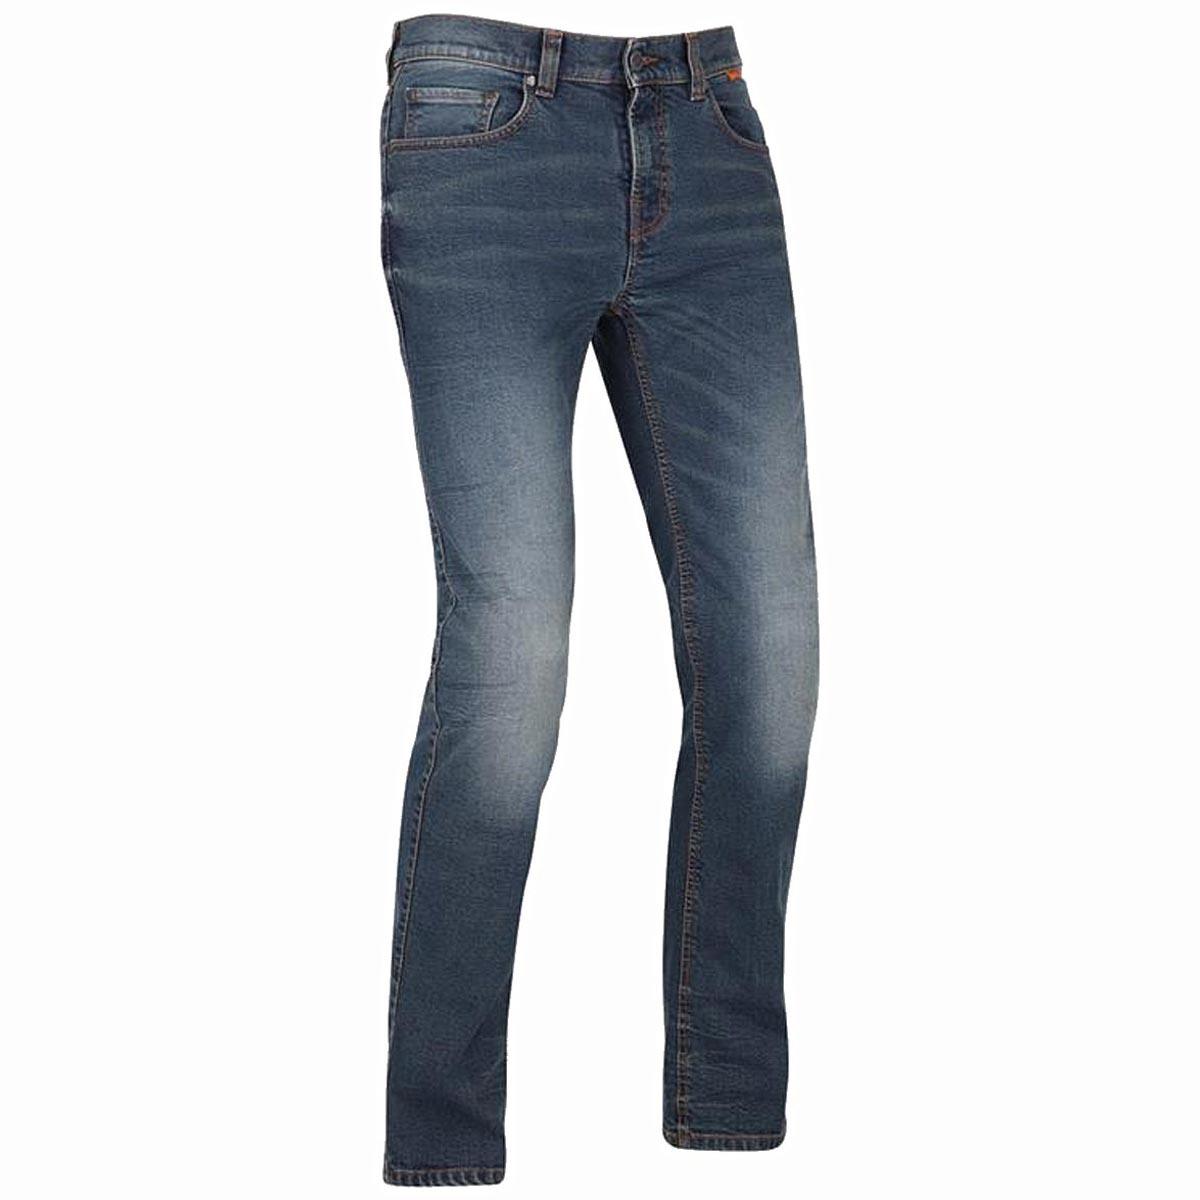 Richa Original 2 Straight Cut Jeans Washed Blue 30in Leg 44in Waist